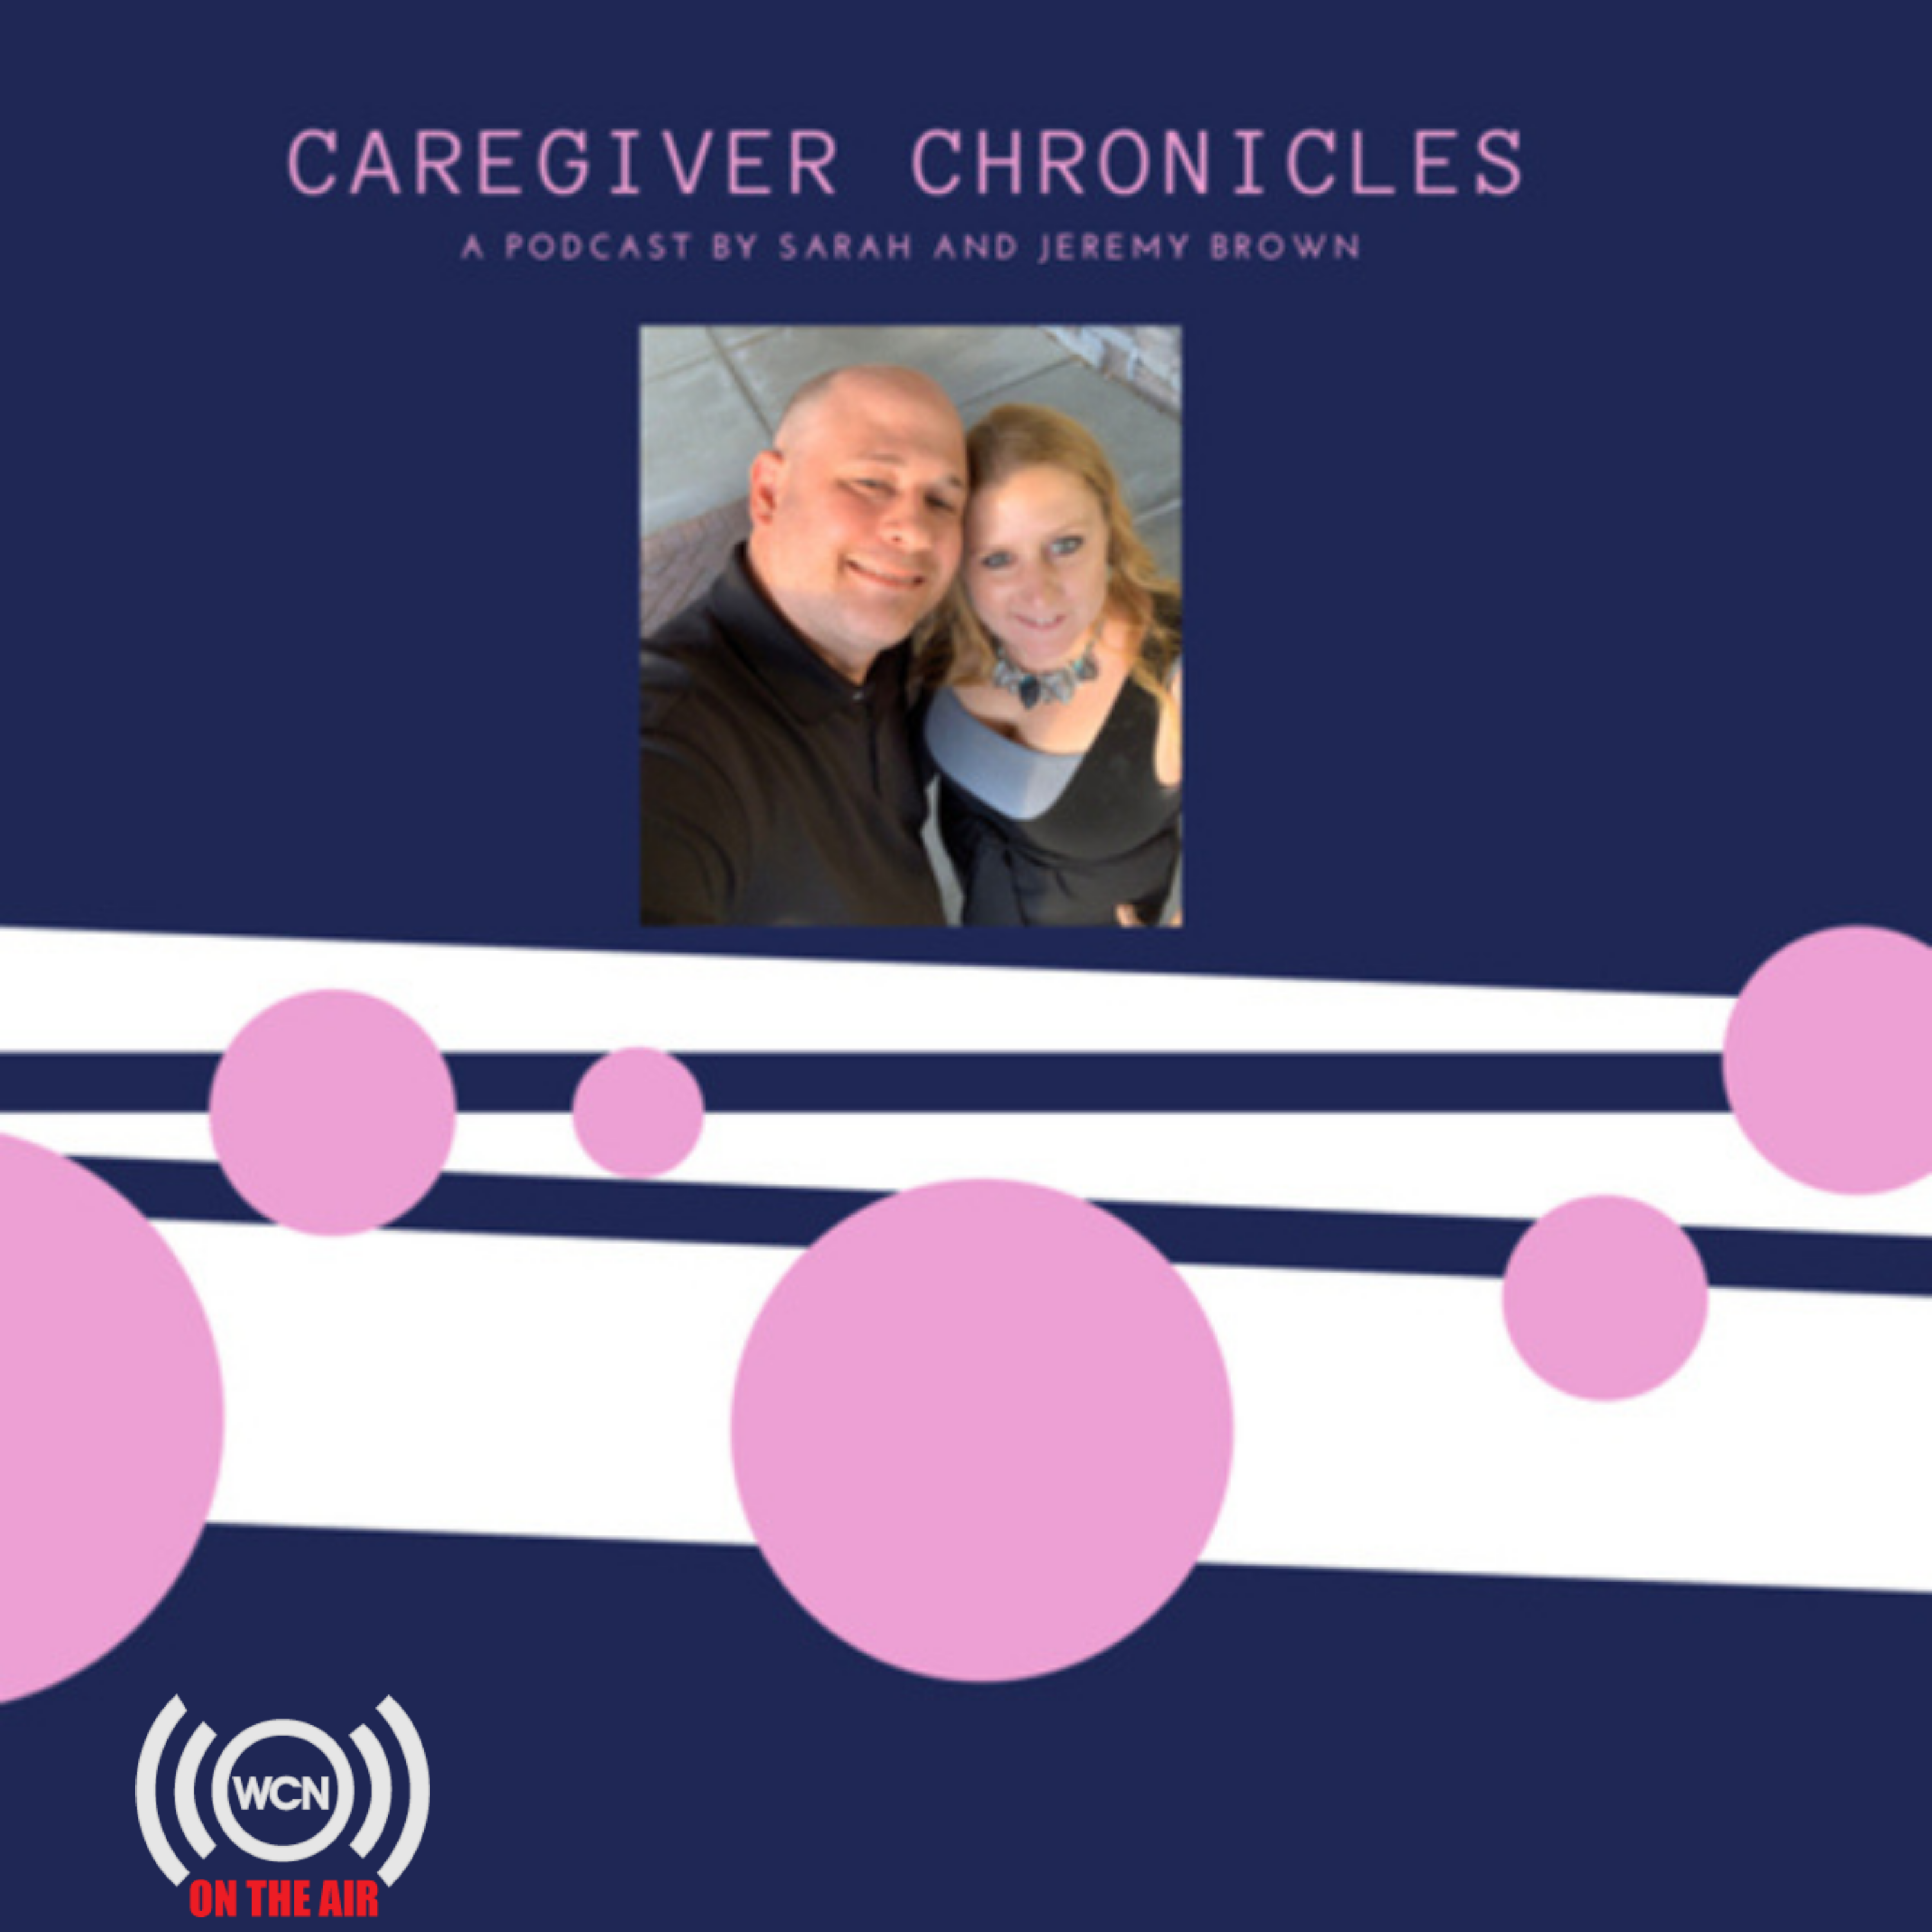 https://thewholecarenetwork.com/wp-content/uploads/2022/04/Caregiver-Chronicals-.png